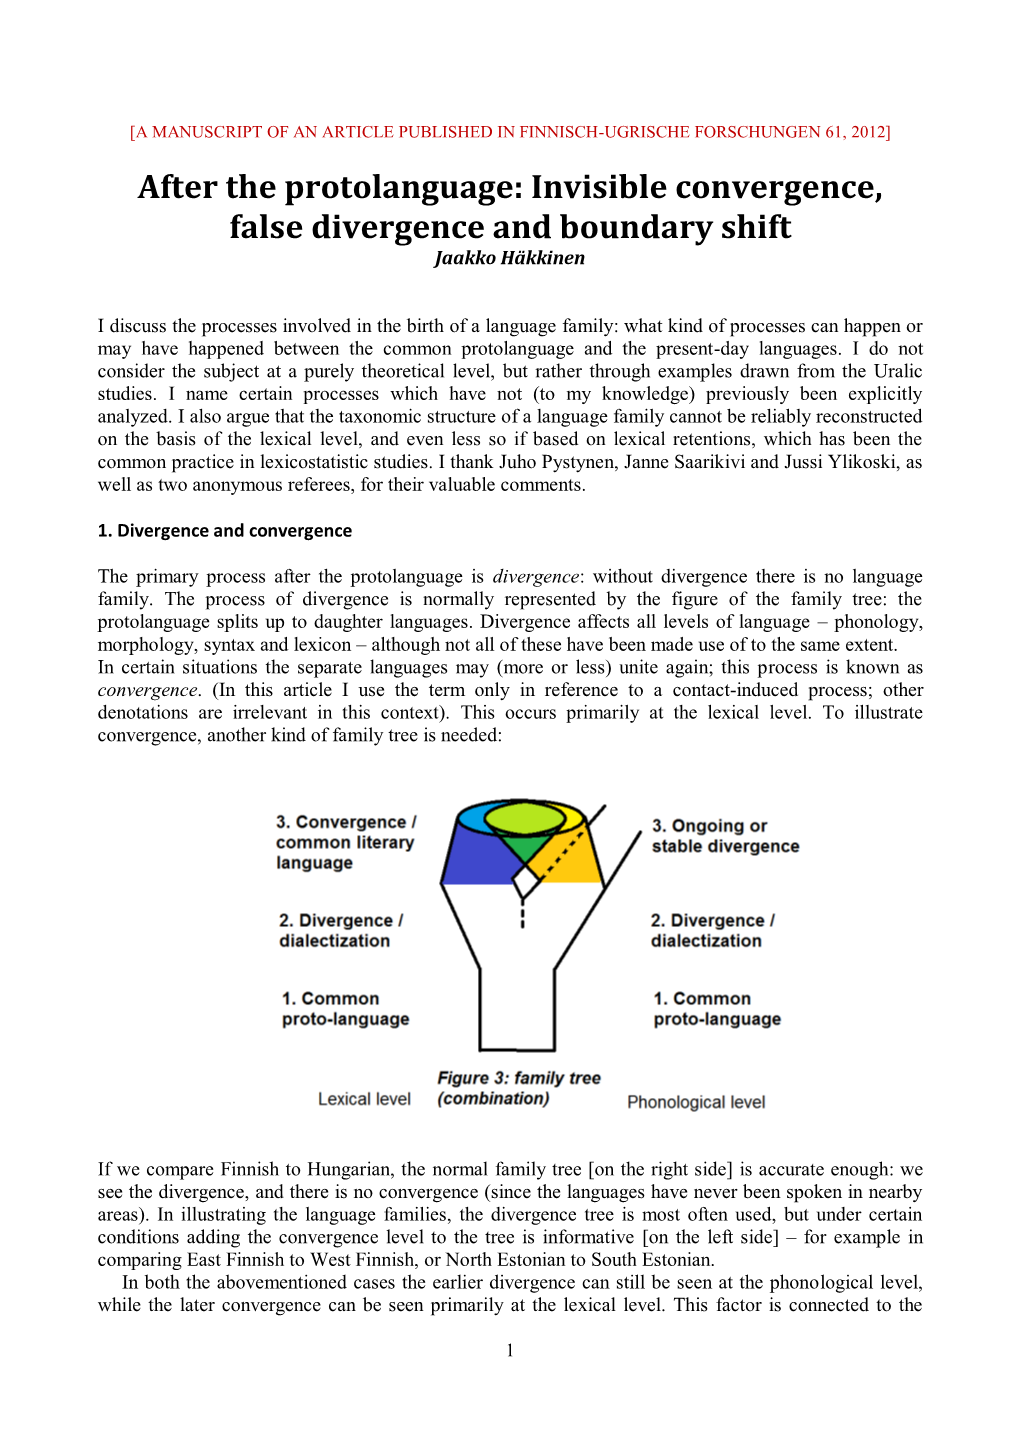 After the Protolanguage: Invisible Convergence, False Divergence and Boundary Shift Jaakko Häkkinen